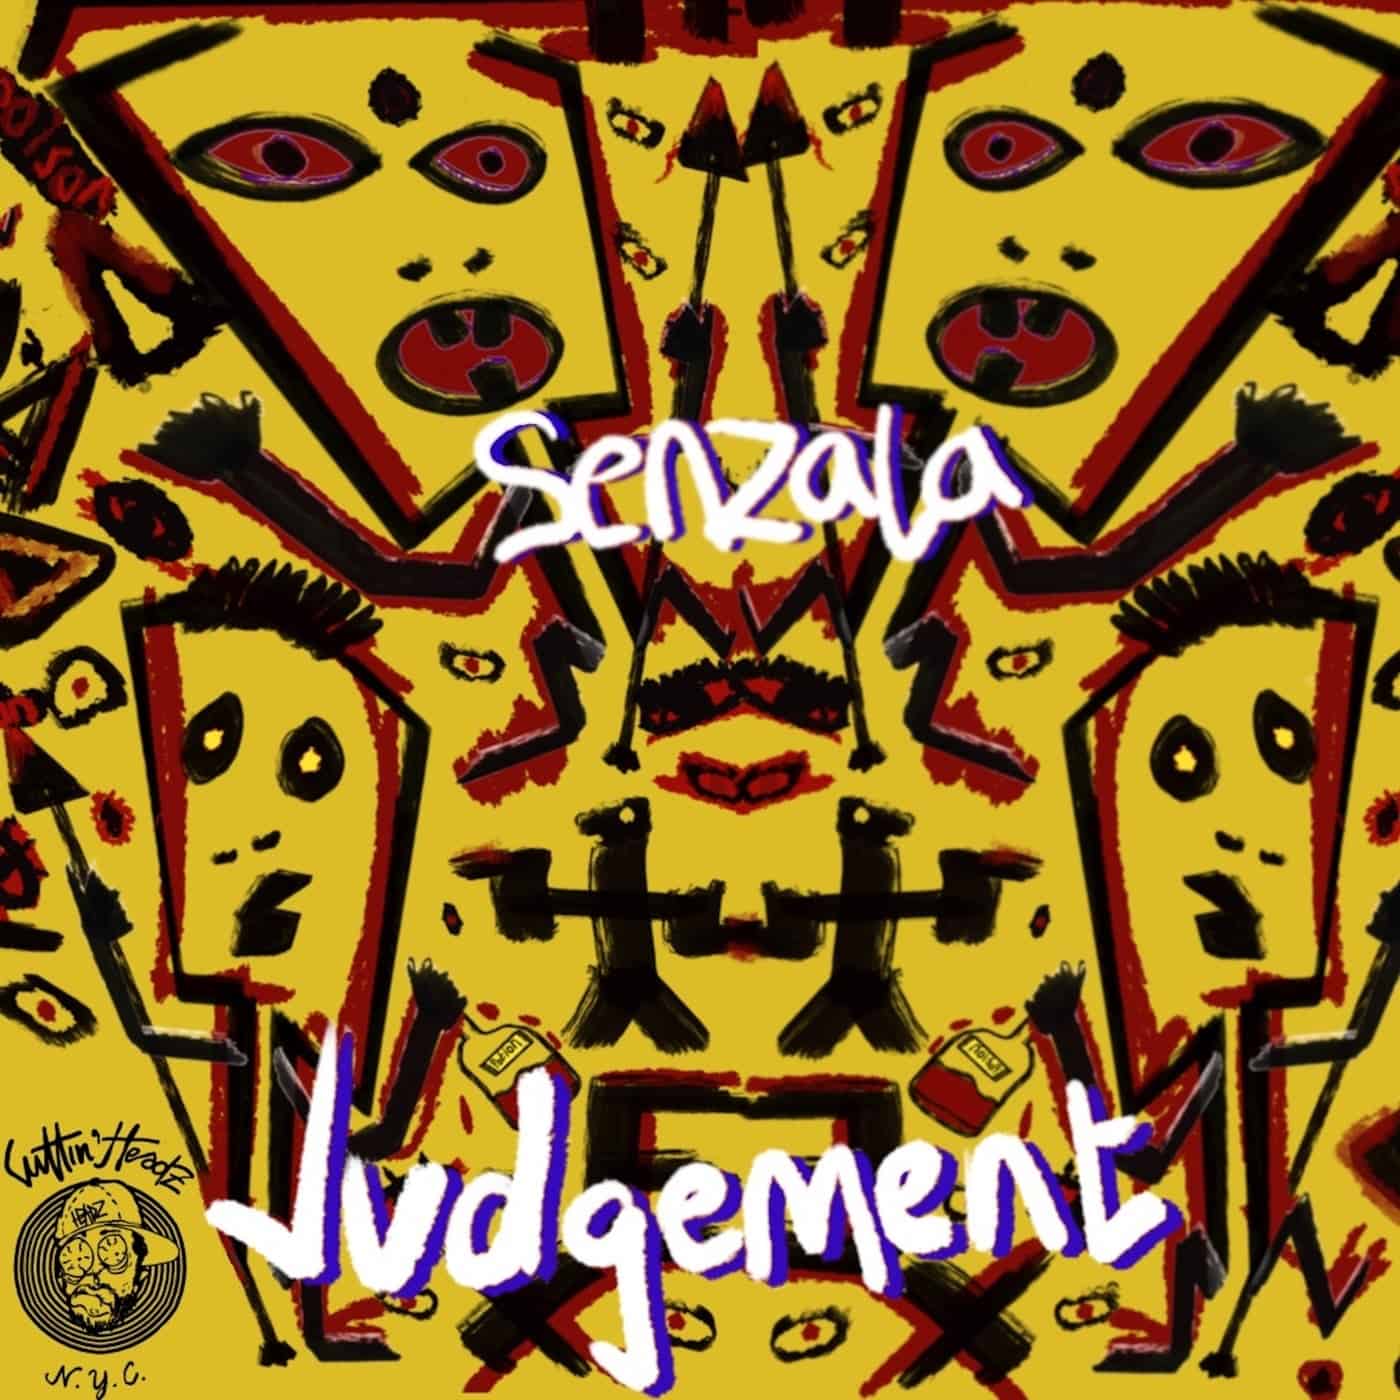 Download Senzala - Judgement on Electrobuzz